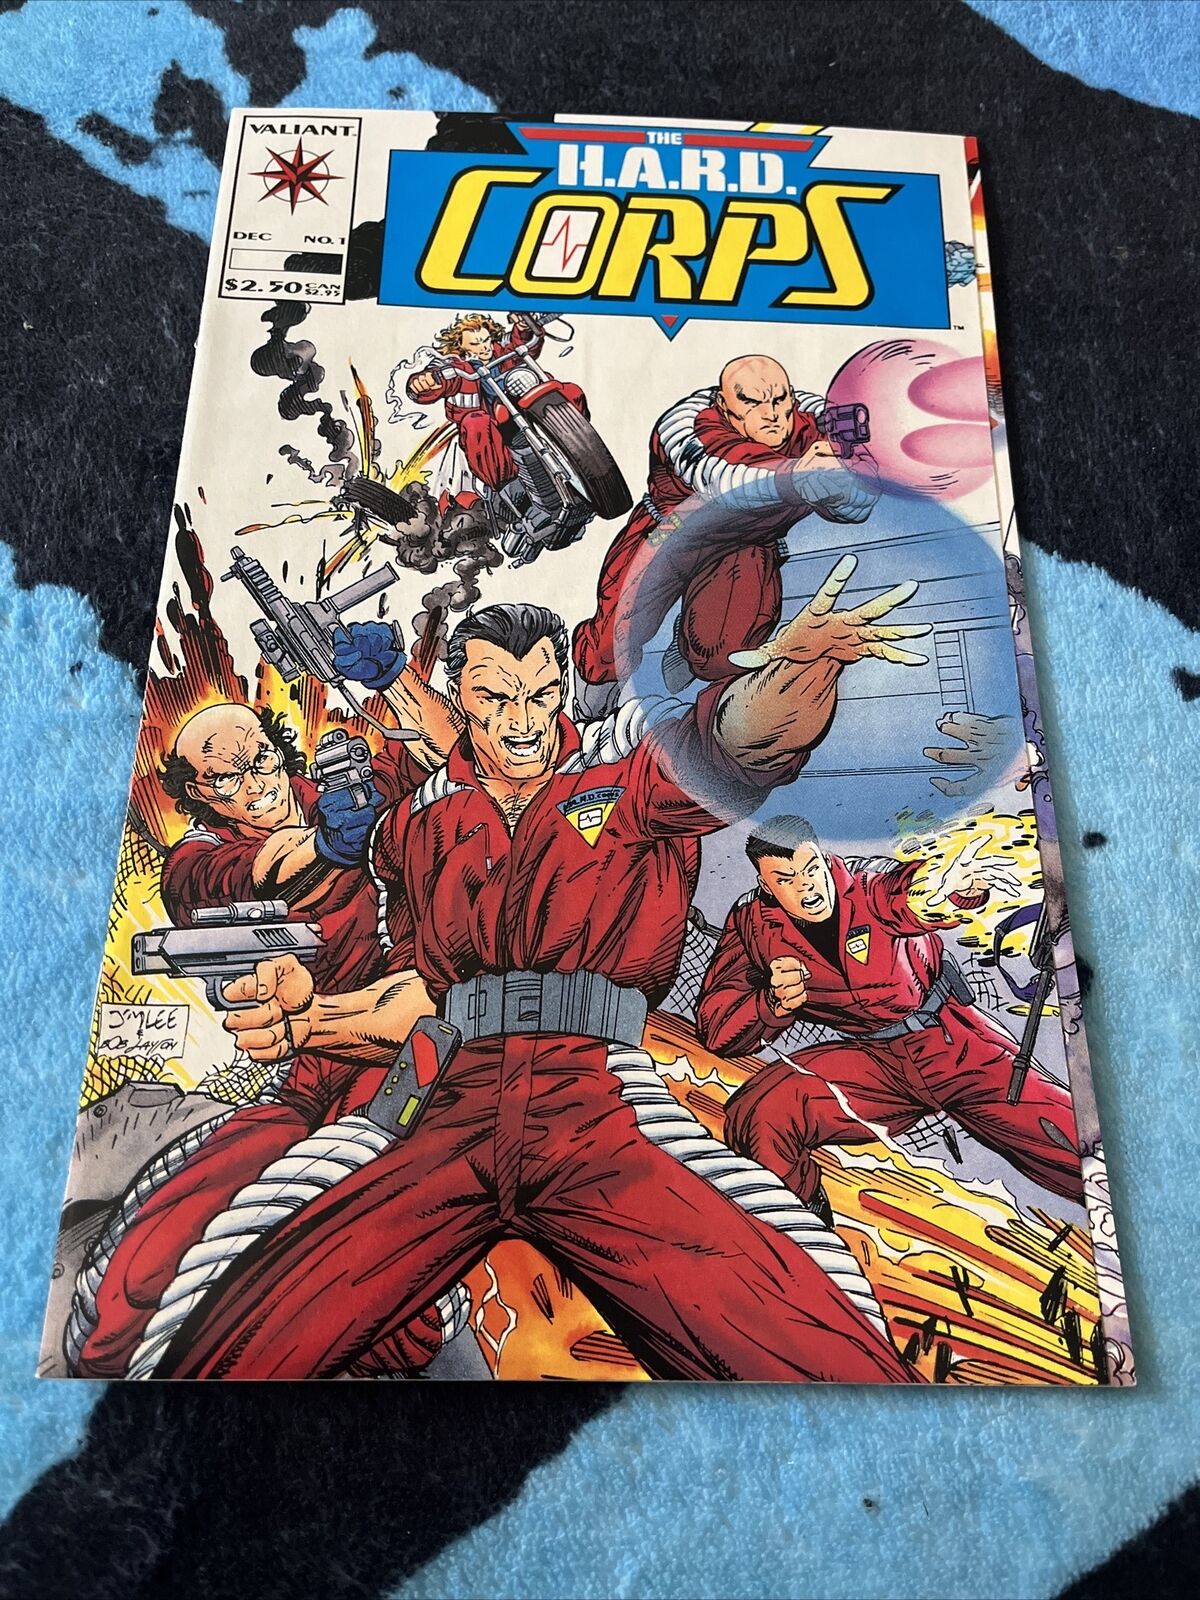 The Hard Corps #1 (Valiant Comics 1992)